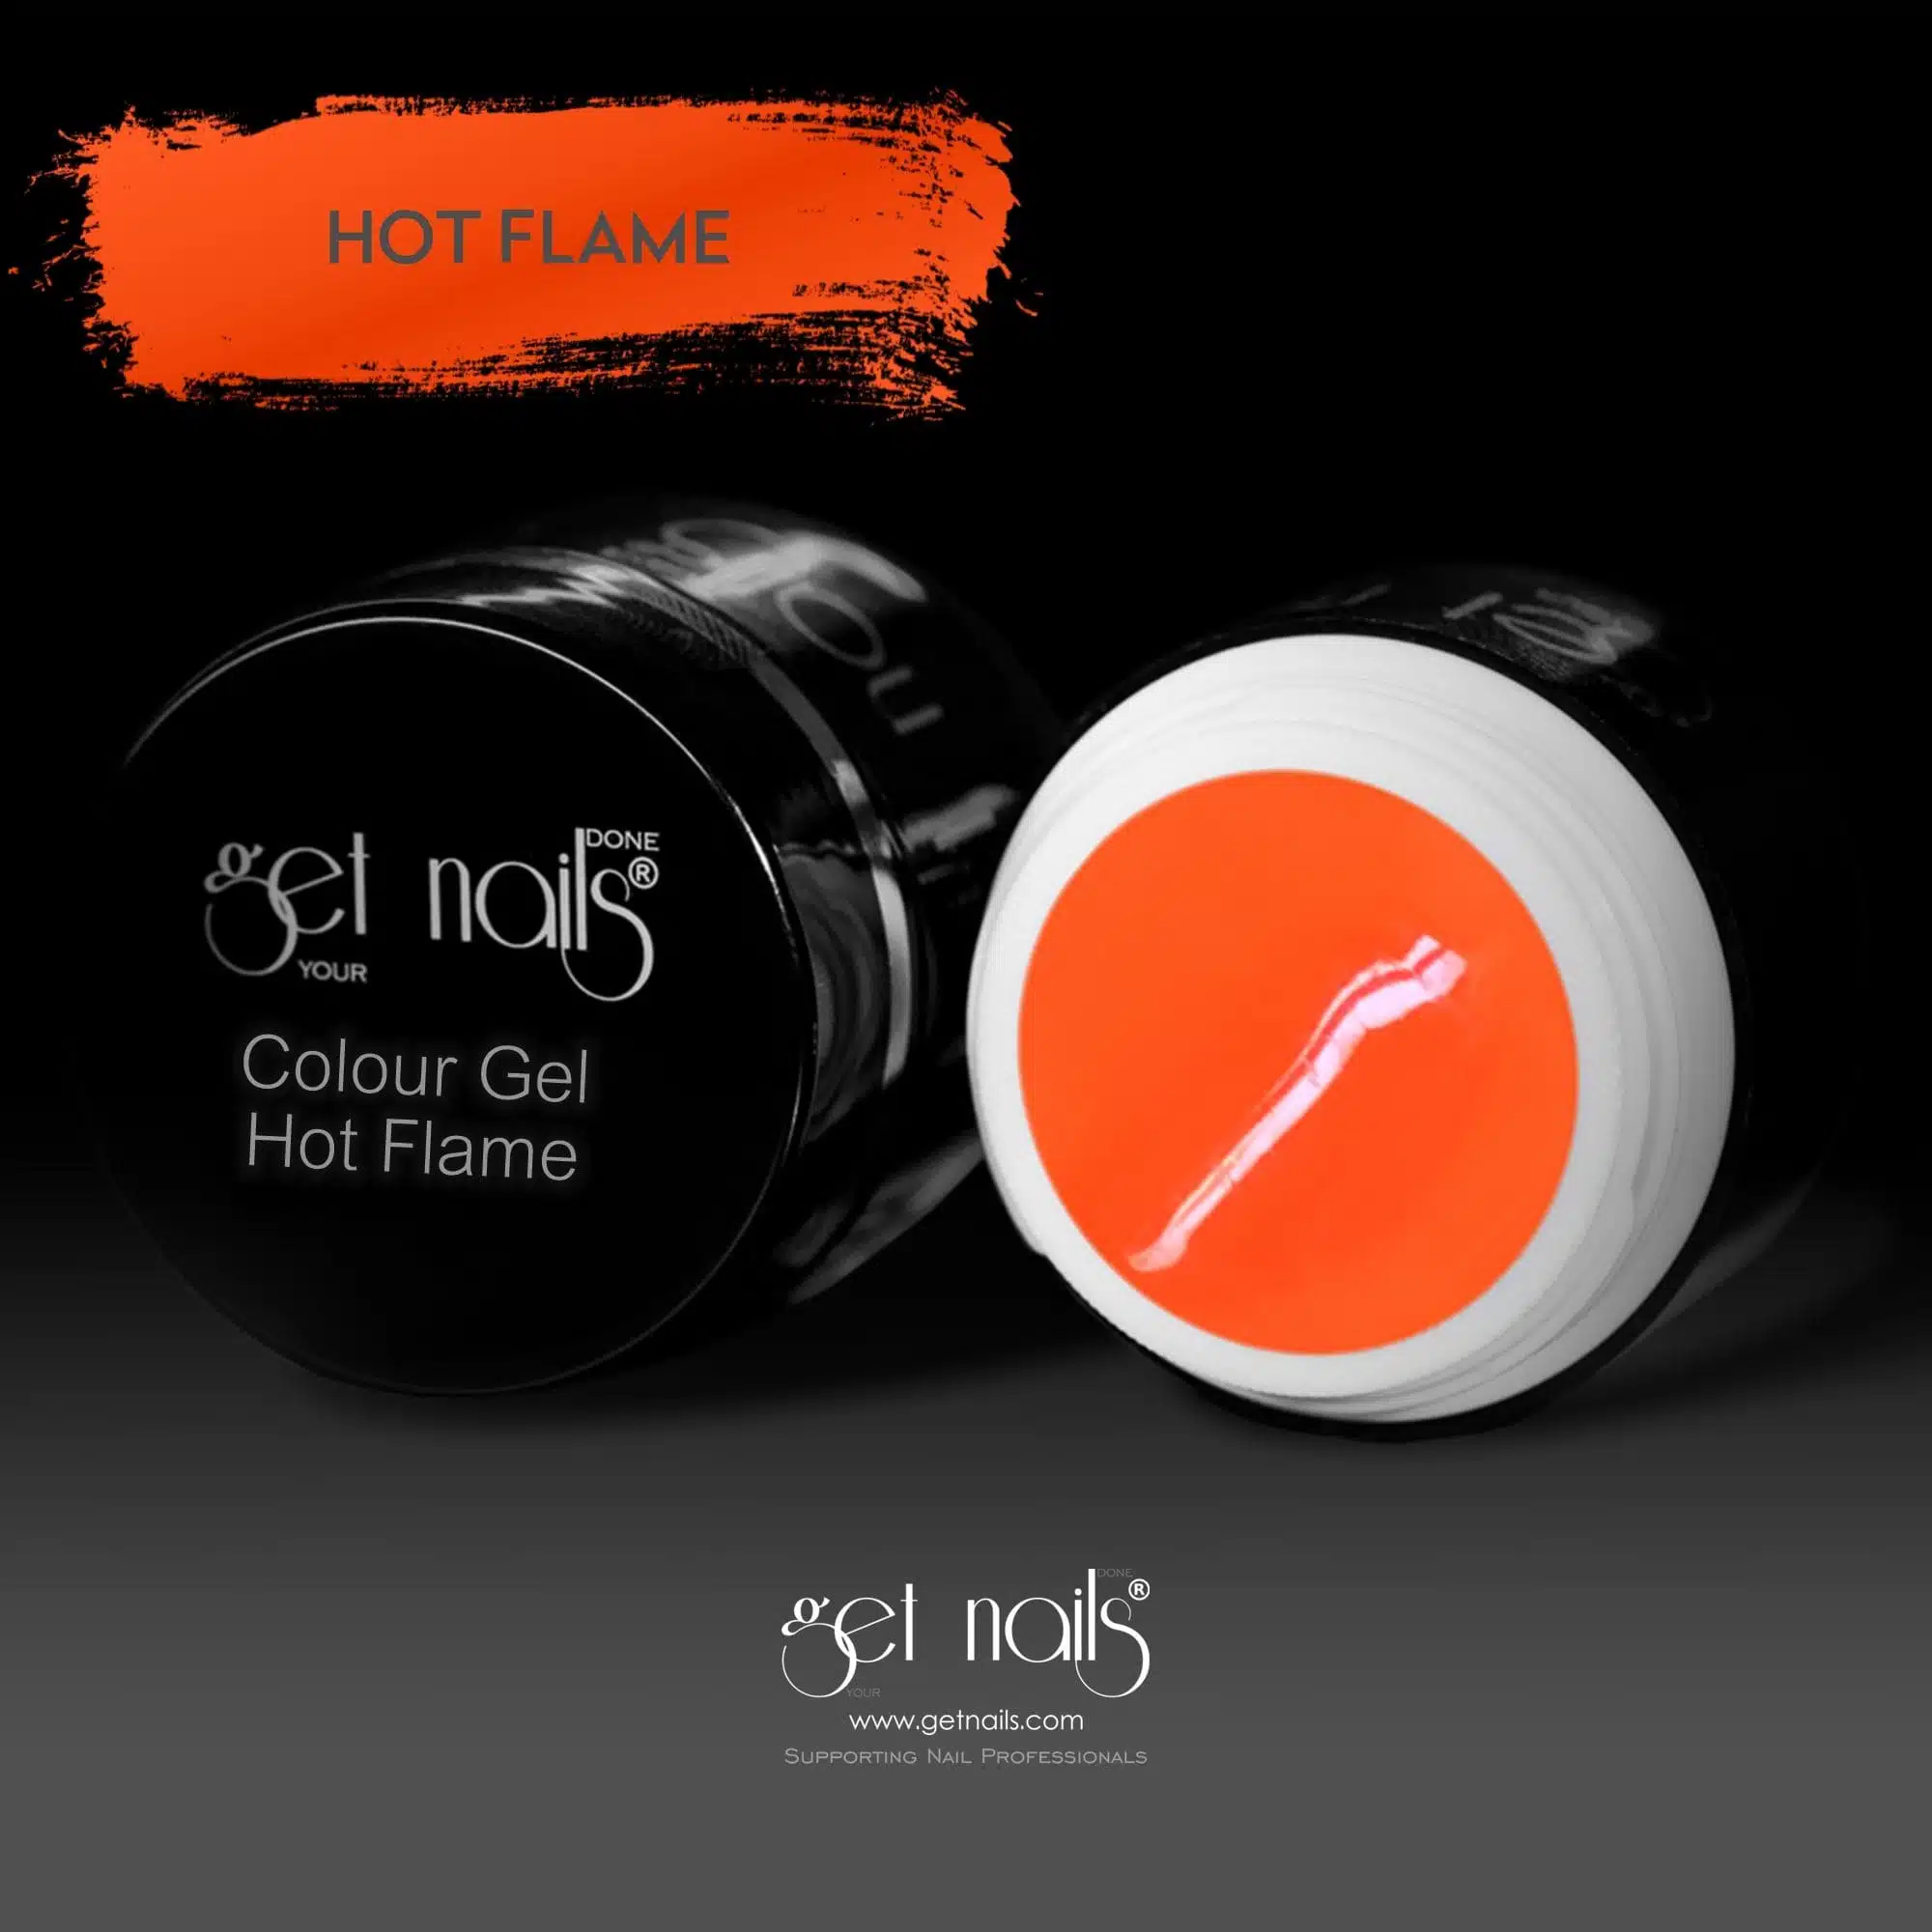 Get Nails Austria - Цветной гель Hot Flame 5g